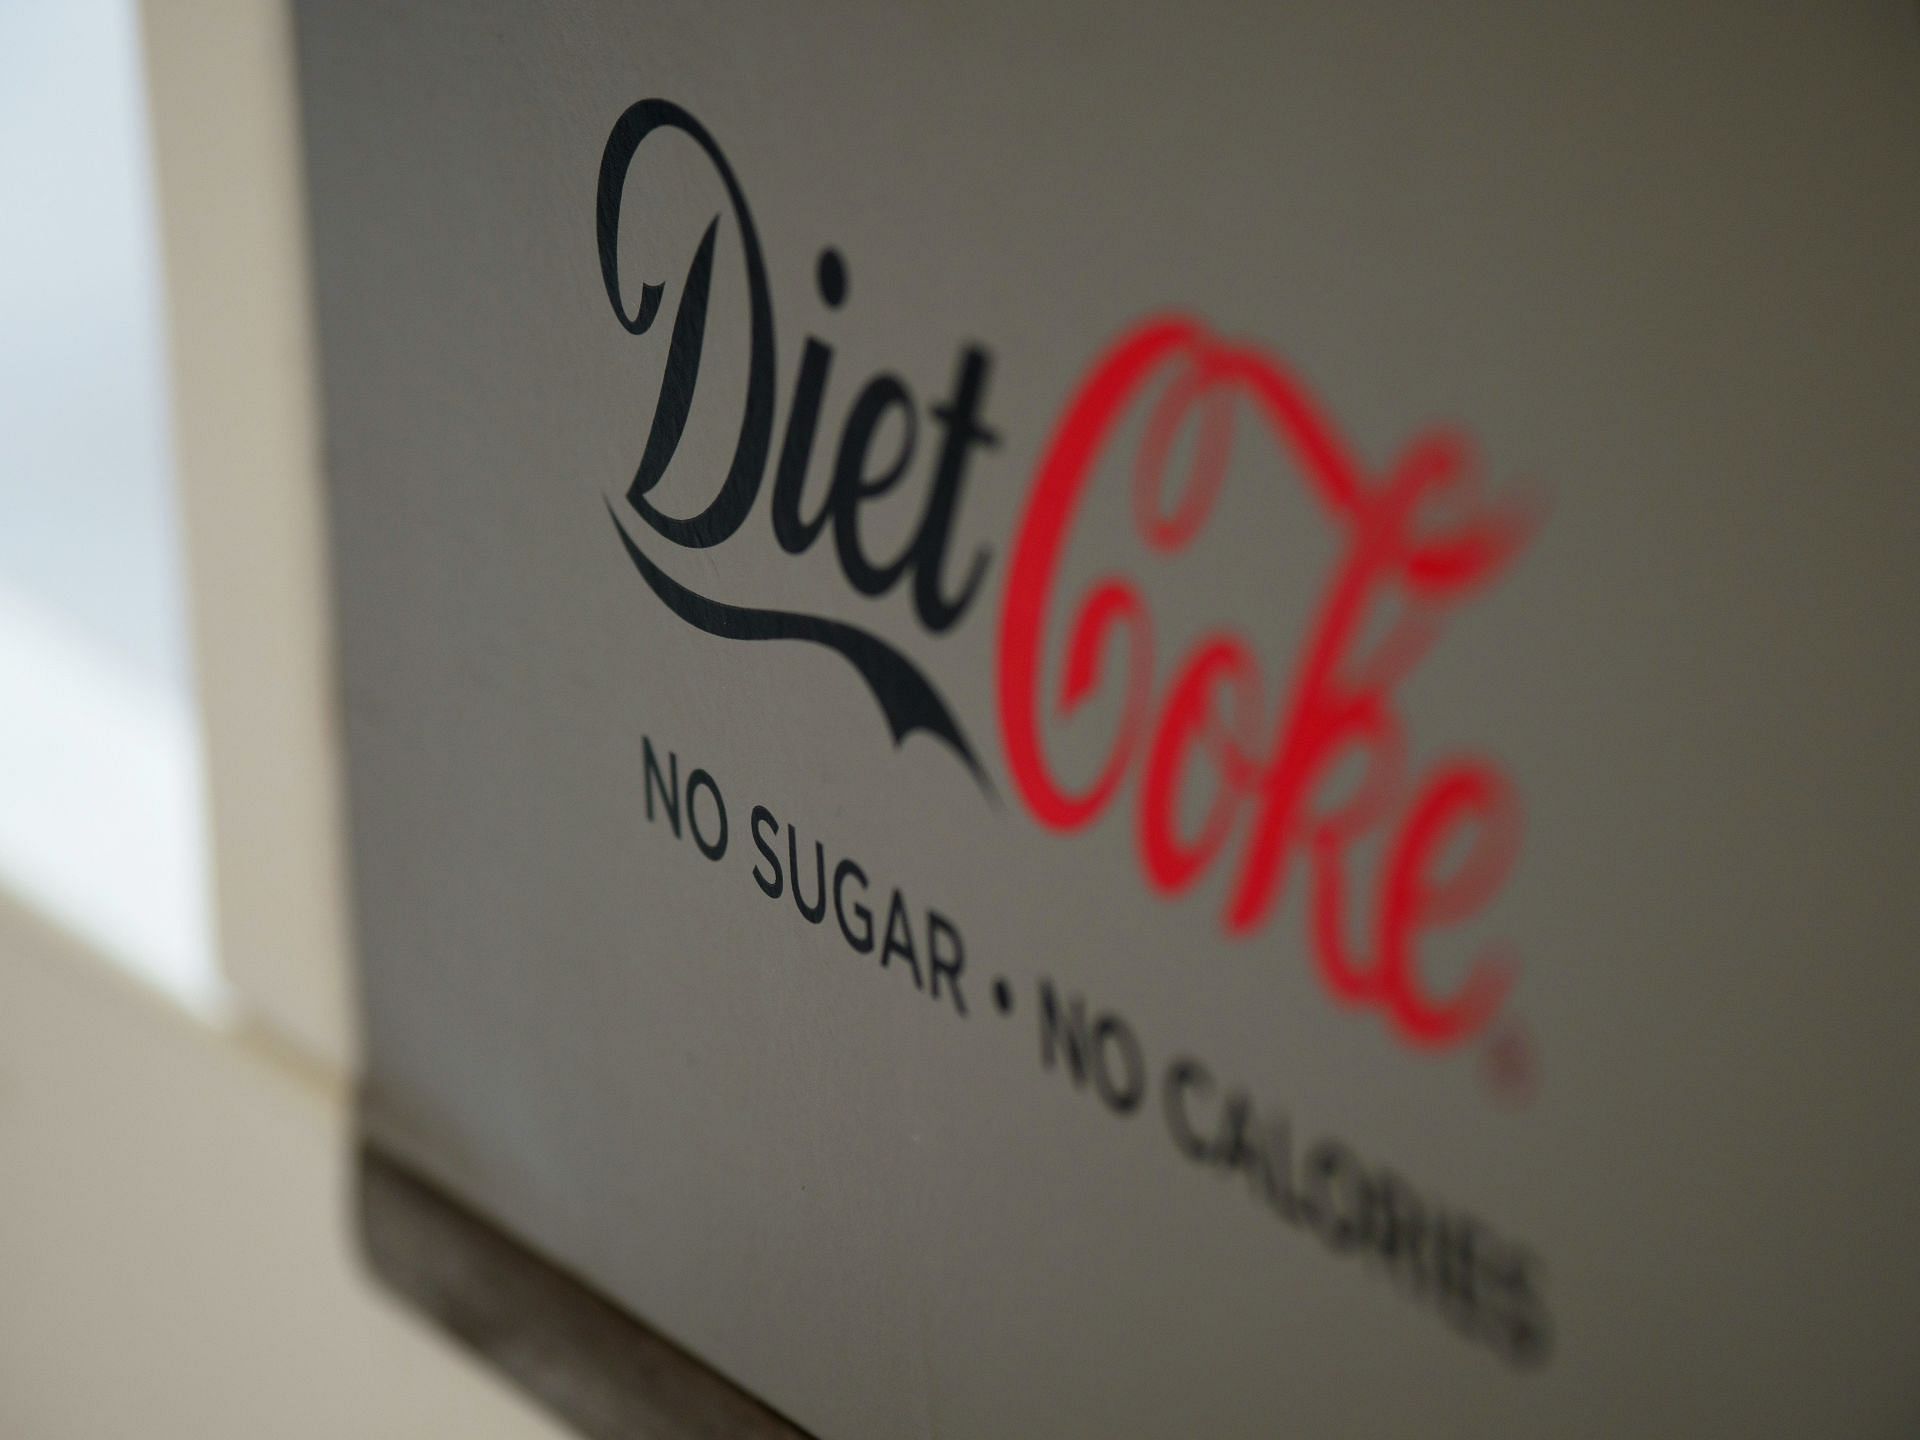 Diet coke does not contain sugar (Image via Unsplash/Brett Jordan)